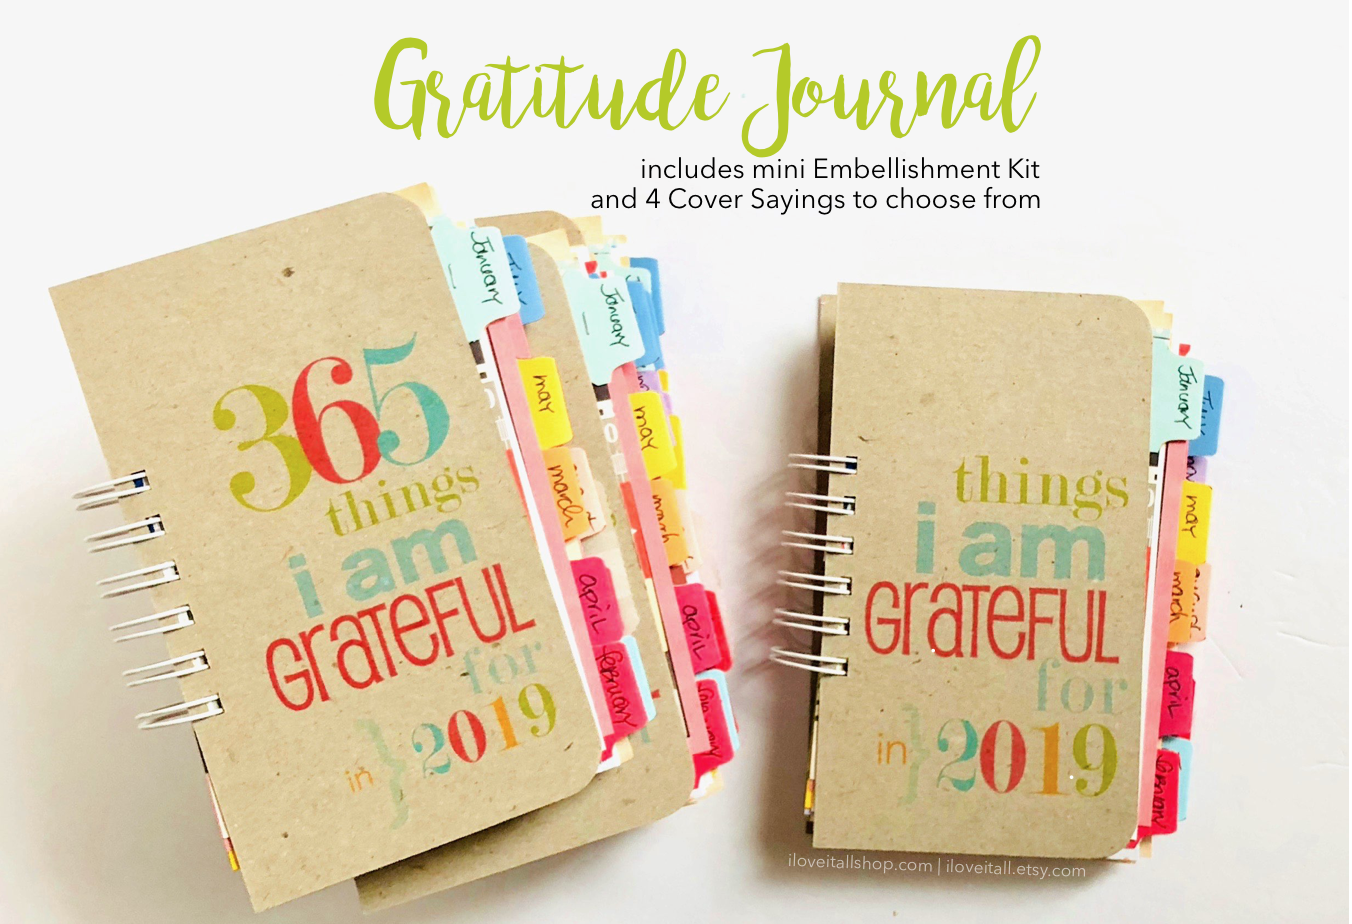 #gratitude journal #thankfulness #mindfulness #gratitude #grateful #Things I Am Grateful For #journal #notebook